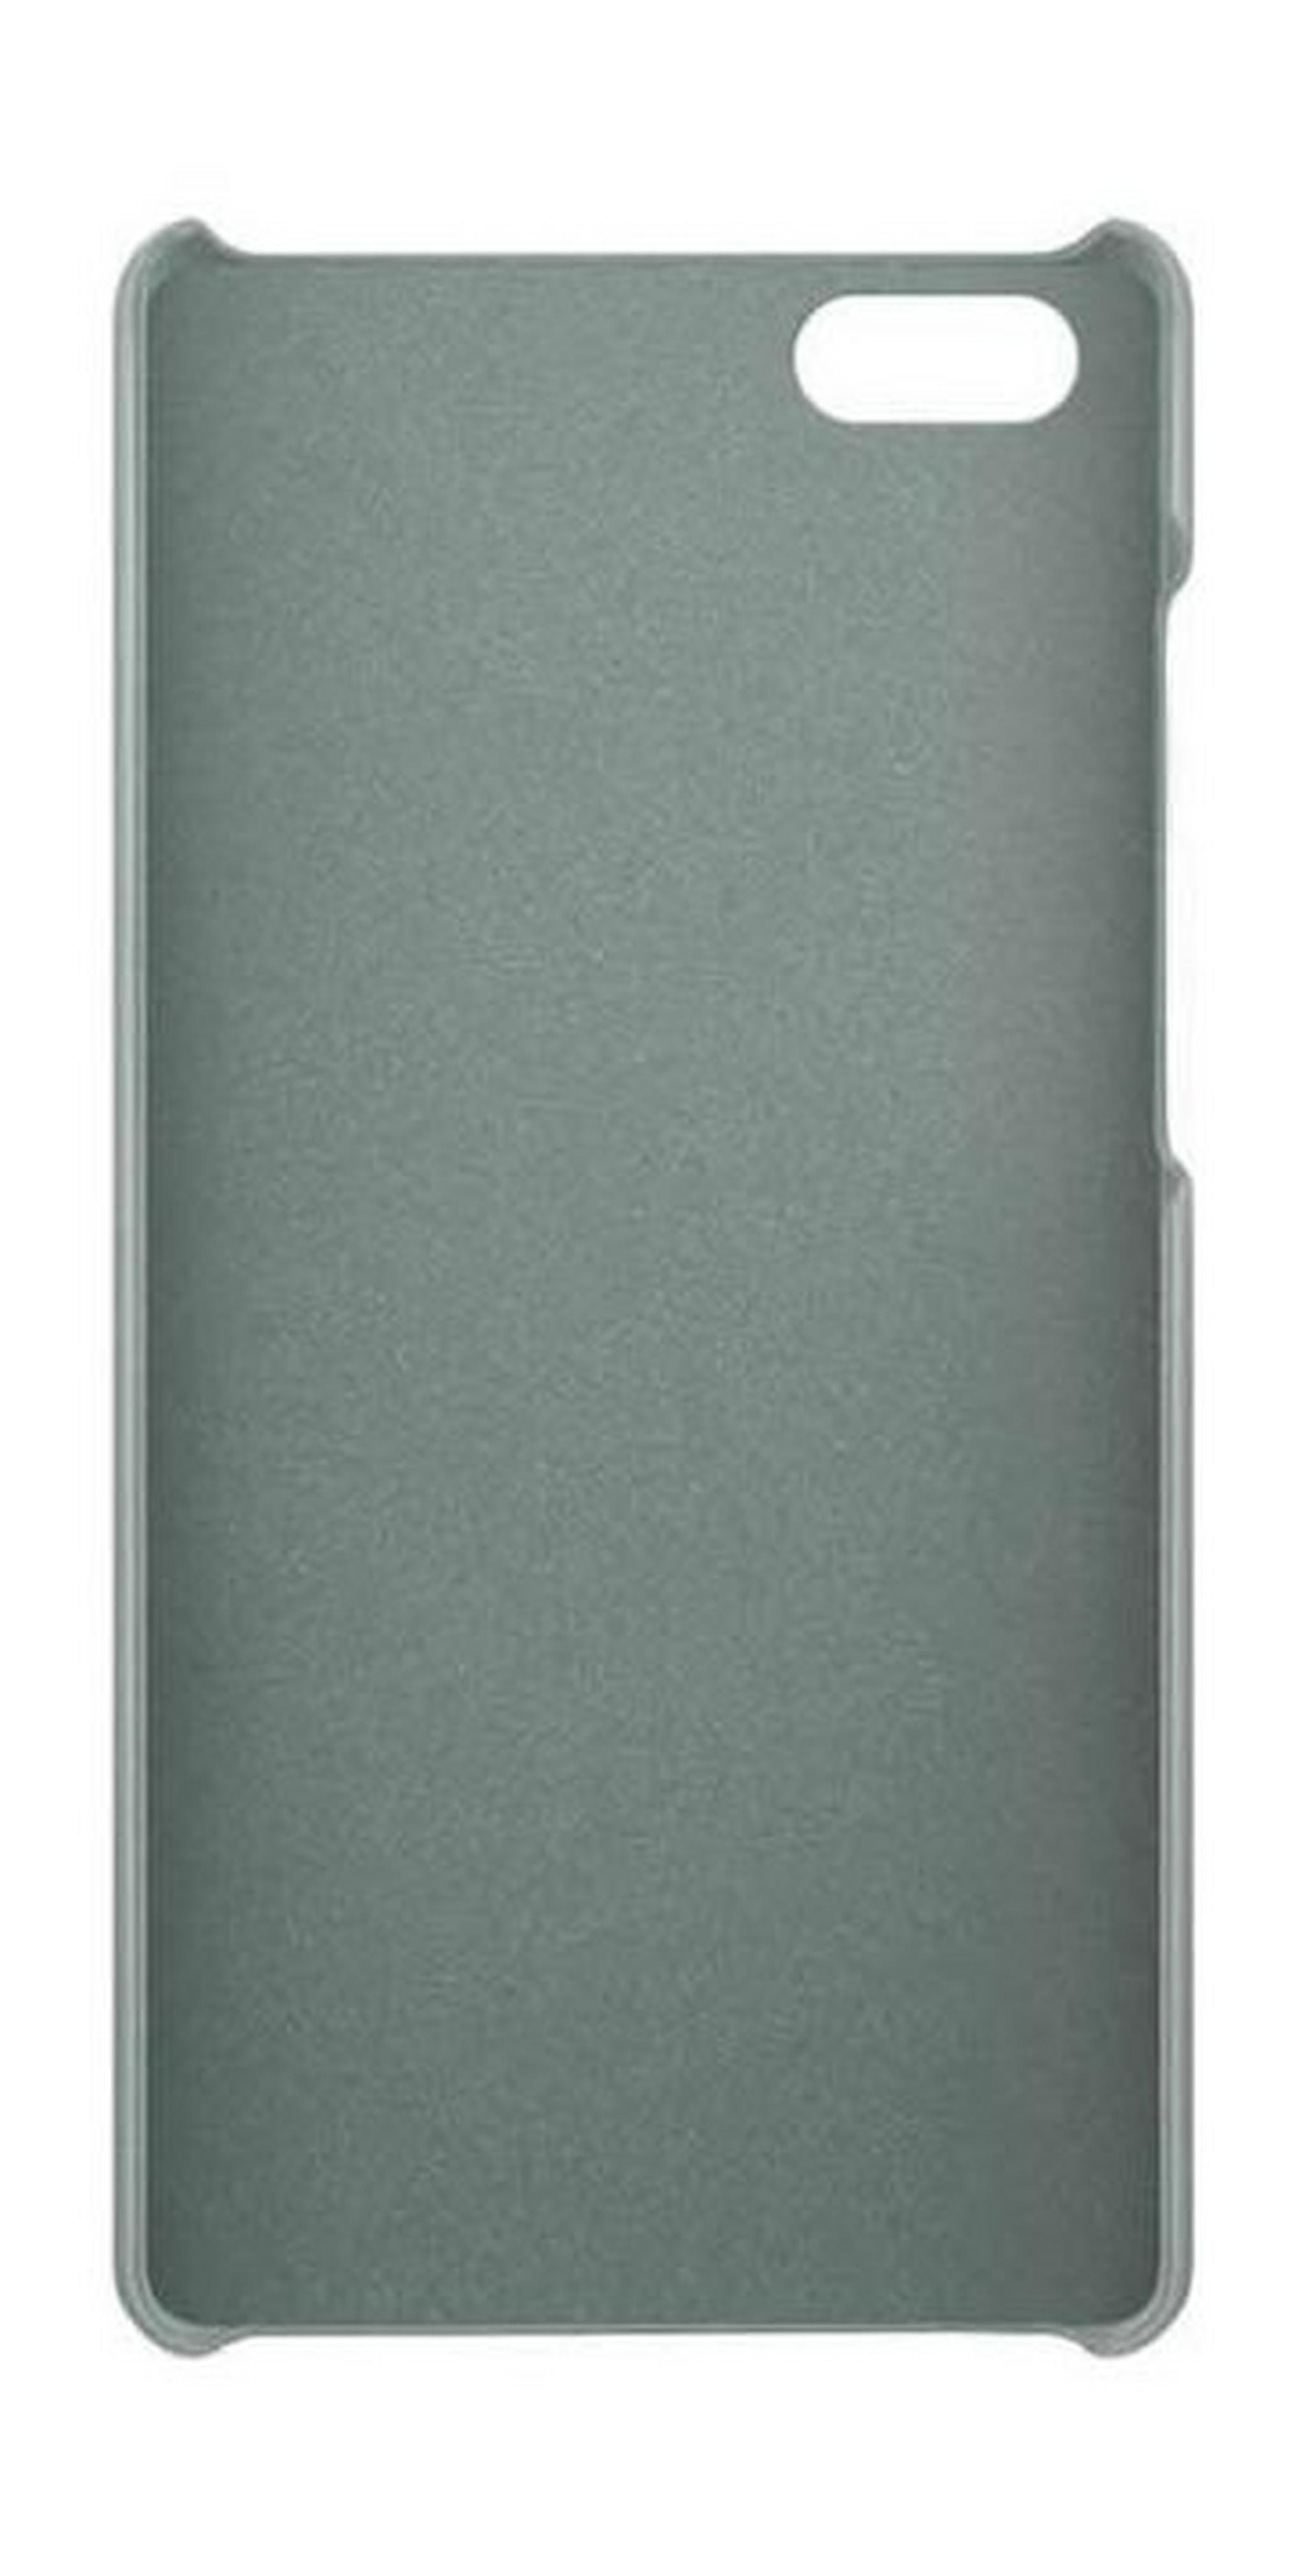 Huawei Slim Protective Case for Huawei P8 Lite (51990915) - Dark Grey